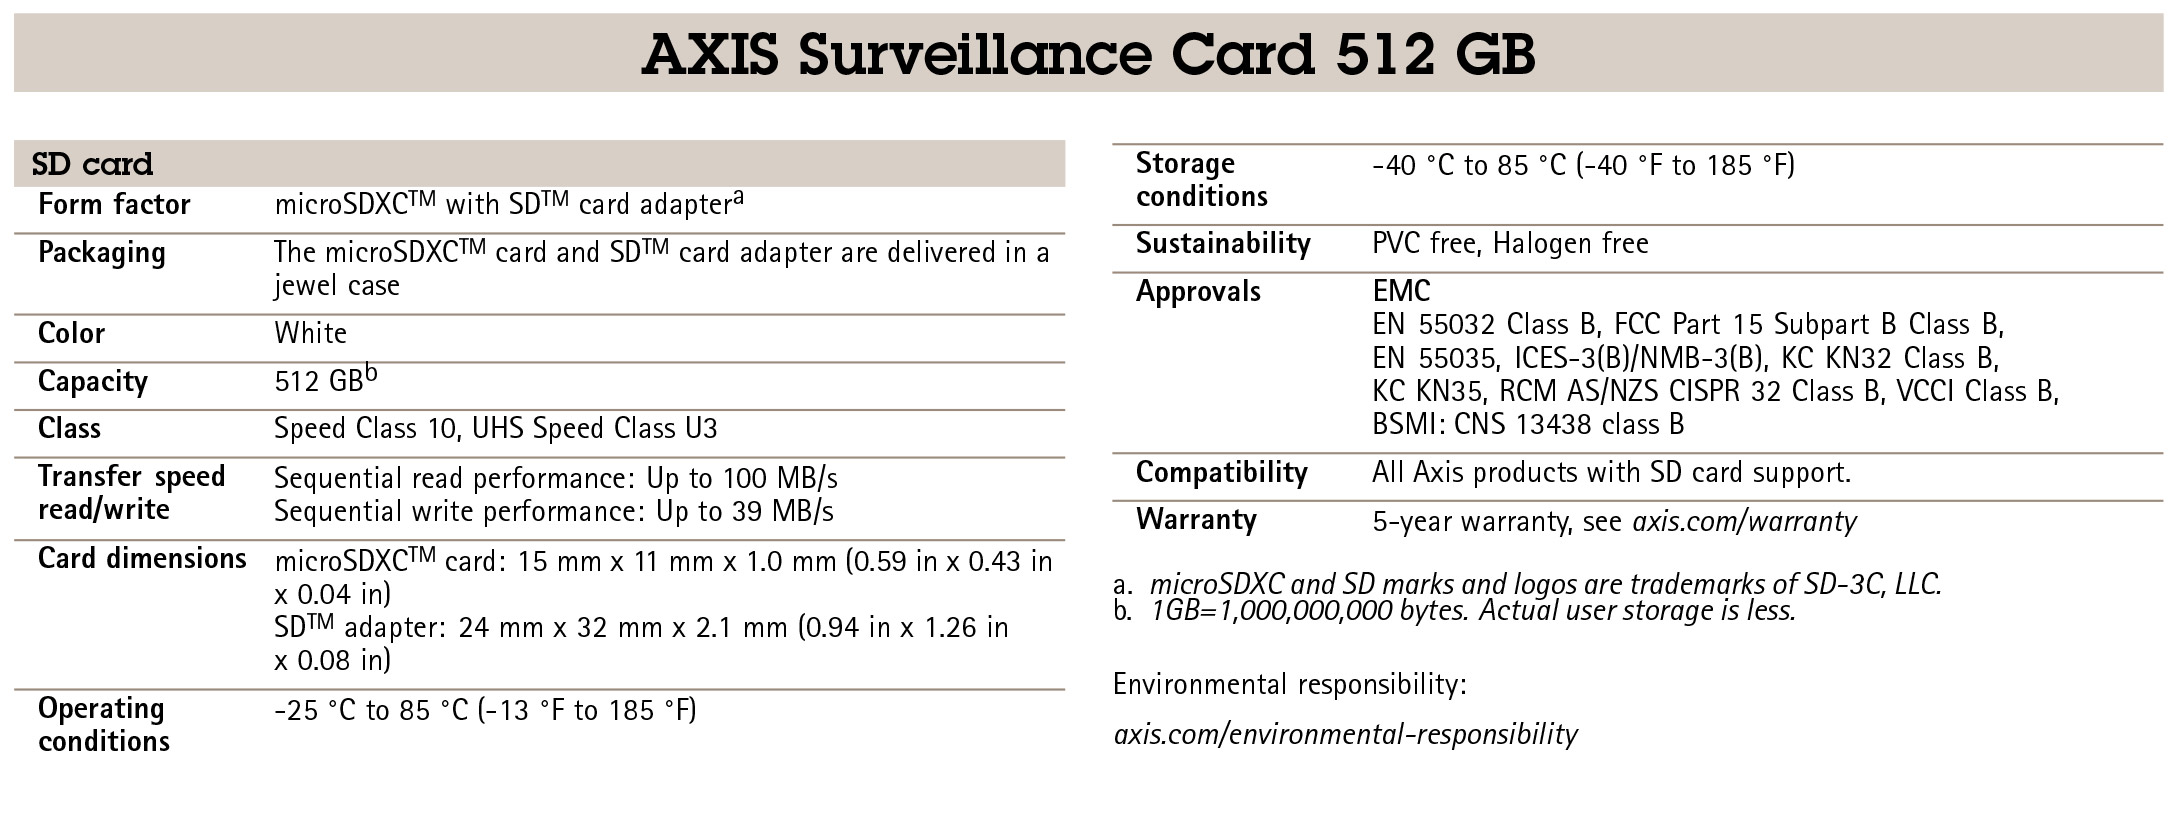 AXIS Surveillance Card 512 GB